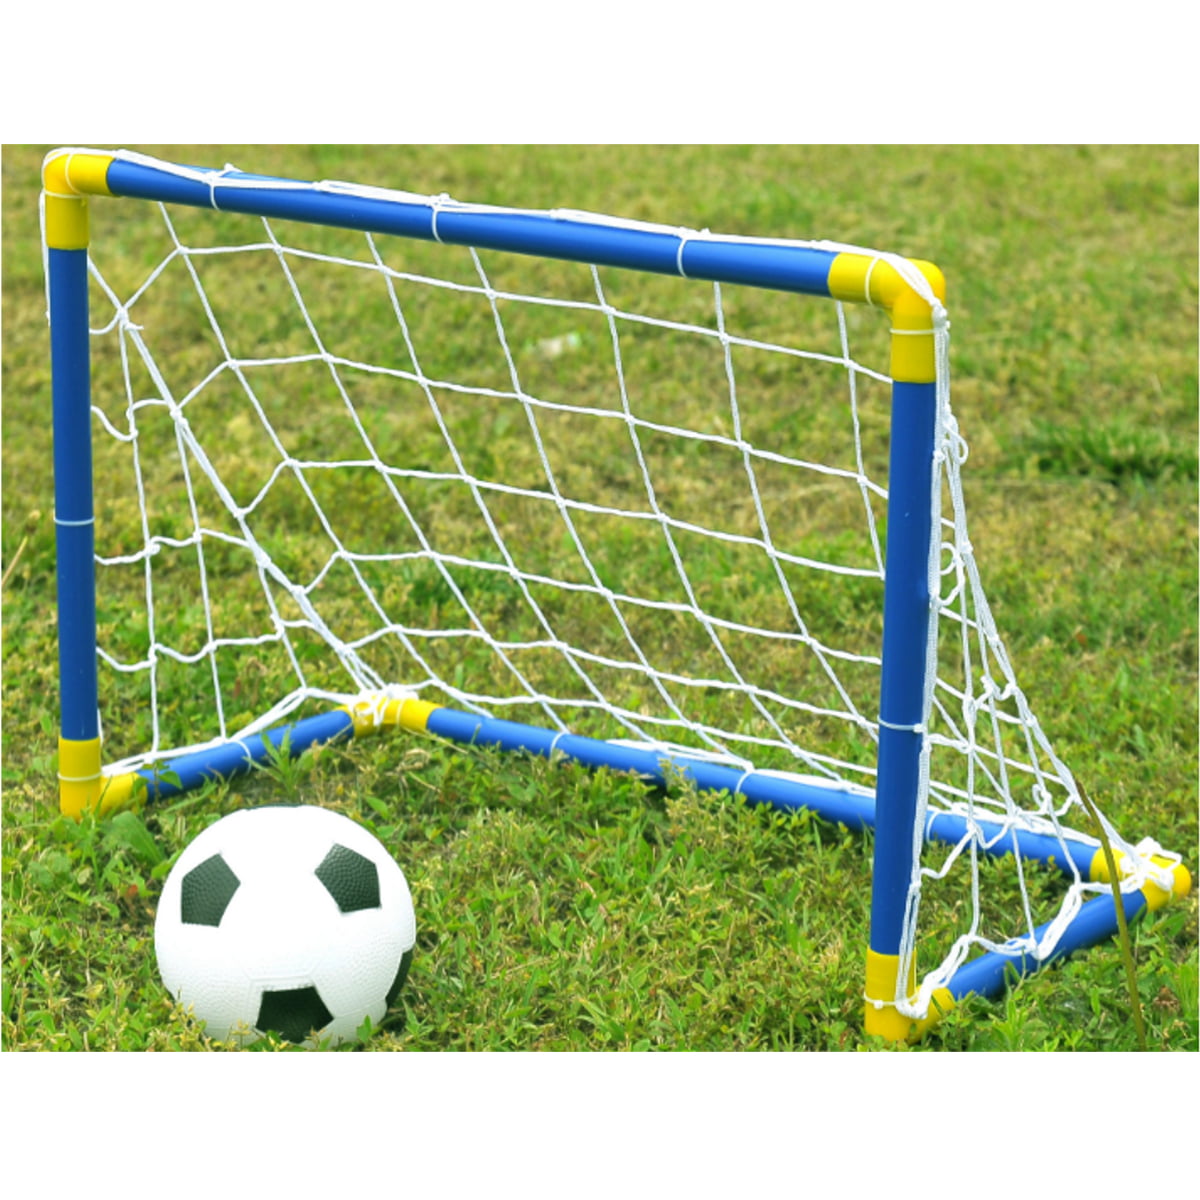 Football Soccer Goal Post Net For Kids Outdoor Football Match Traini LL 